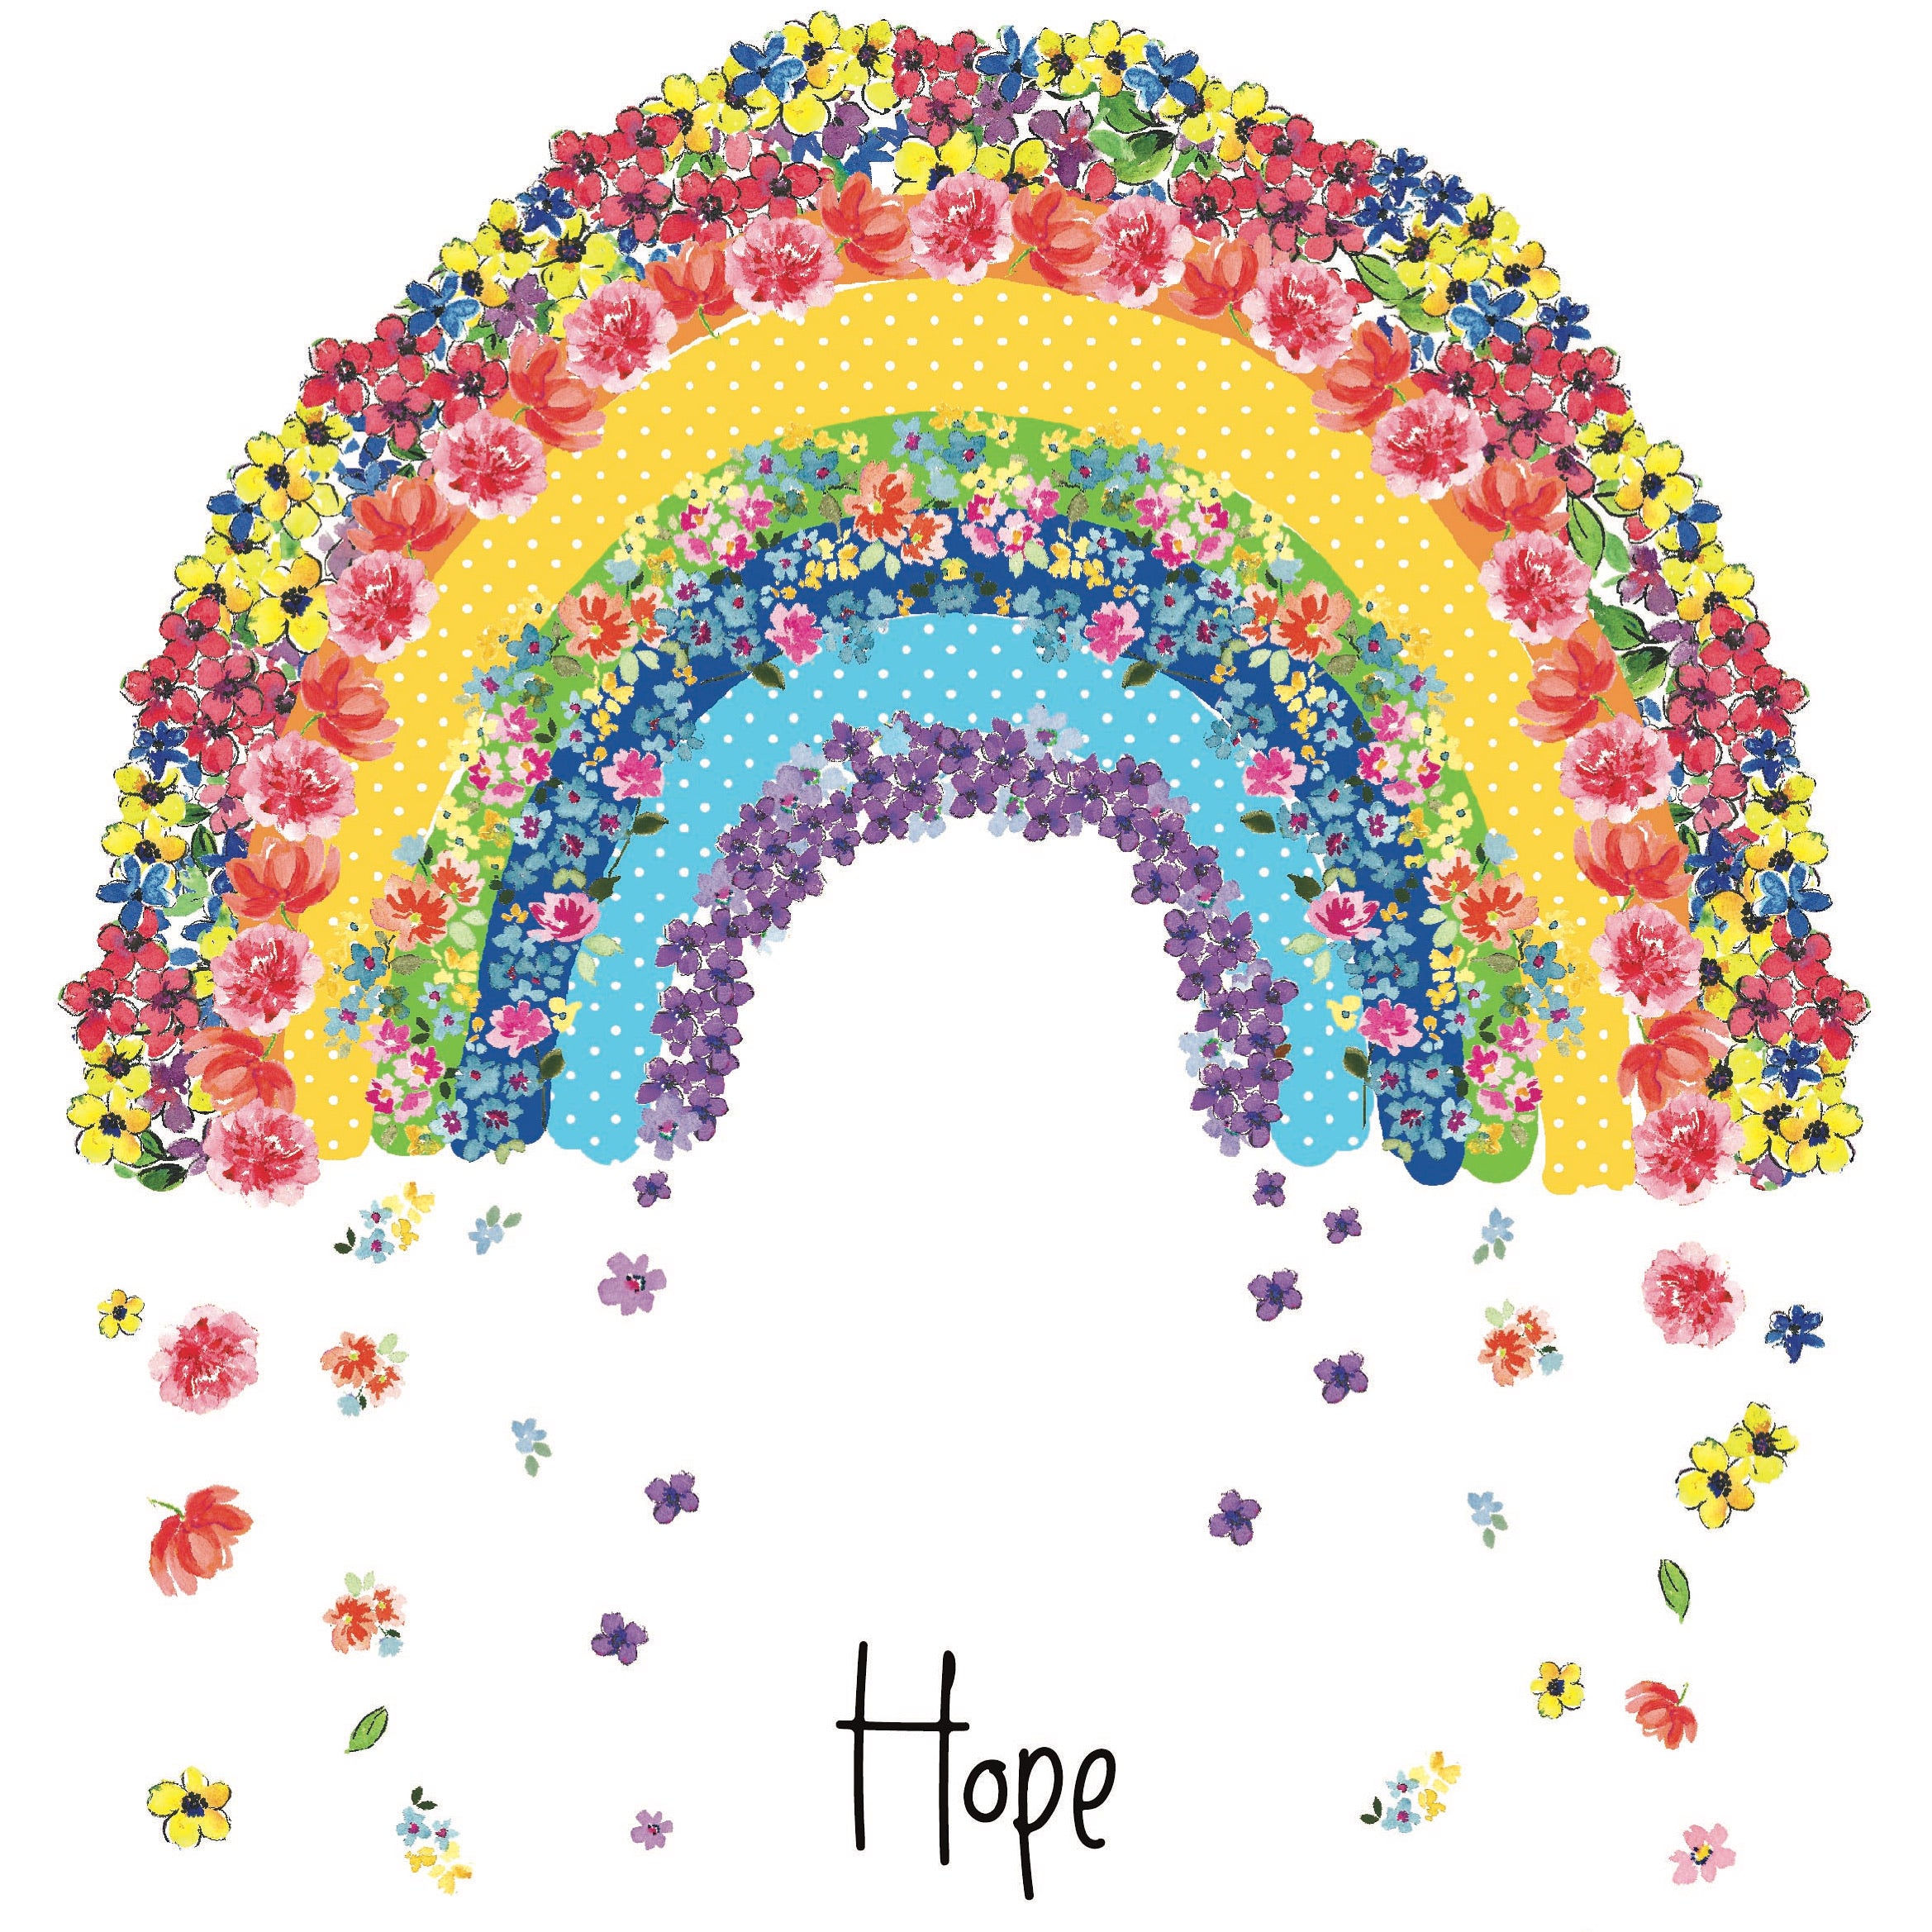 Reduced** Rainbow of Hope Art Print